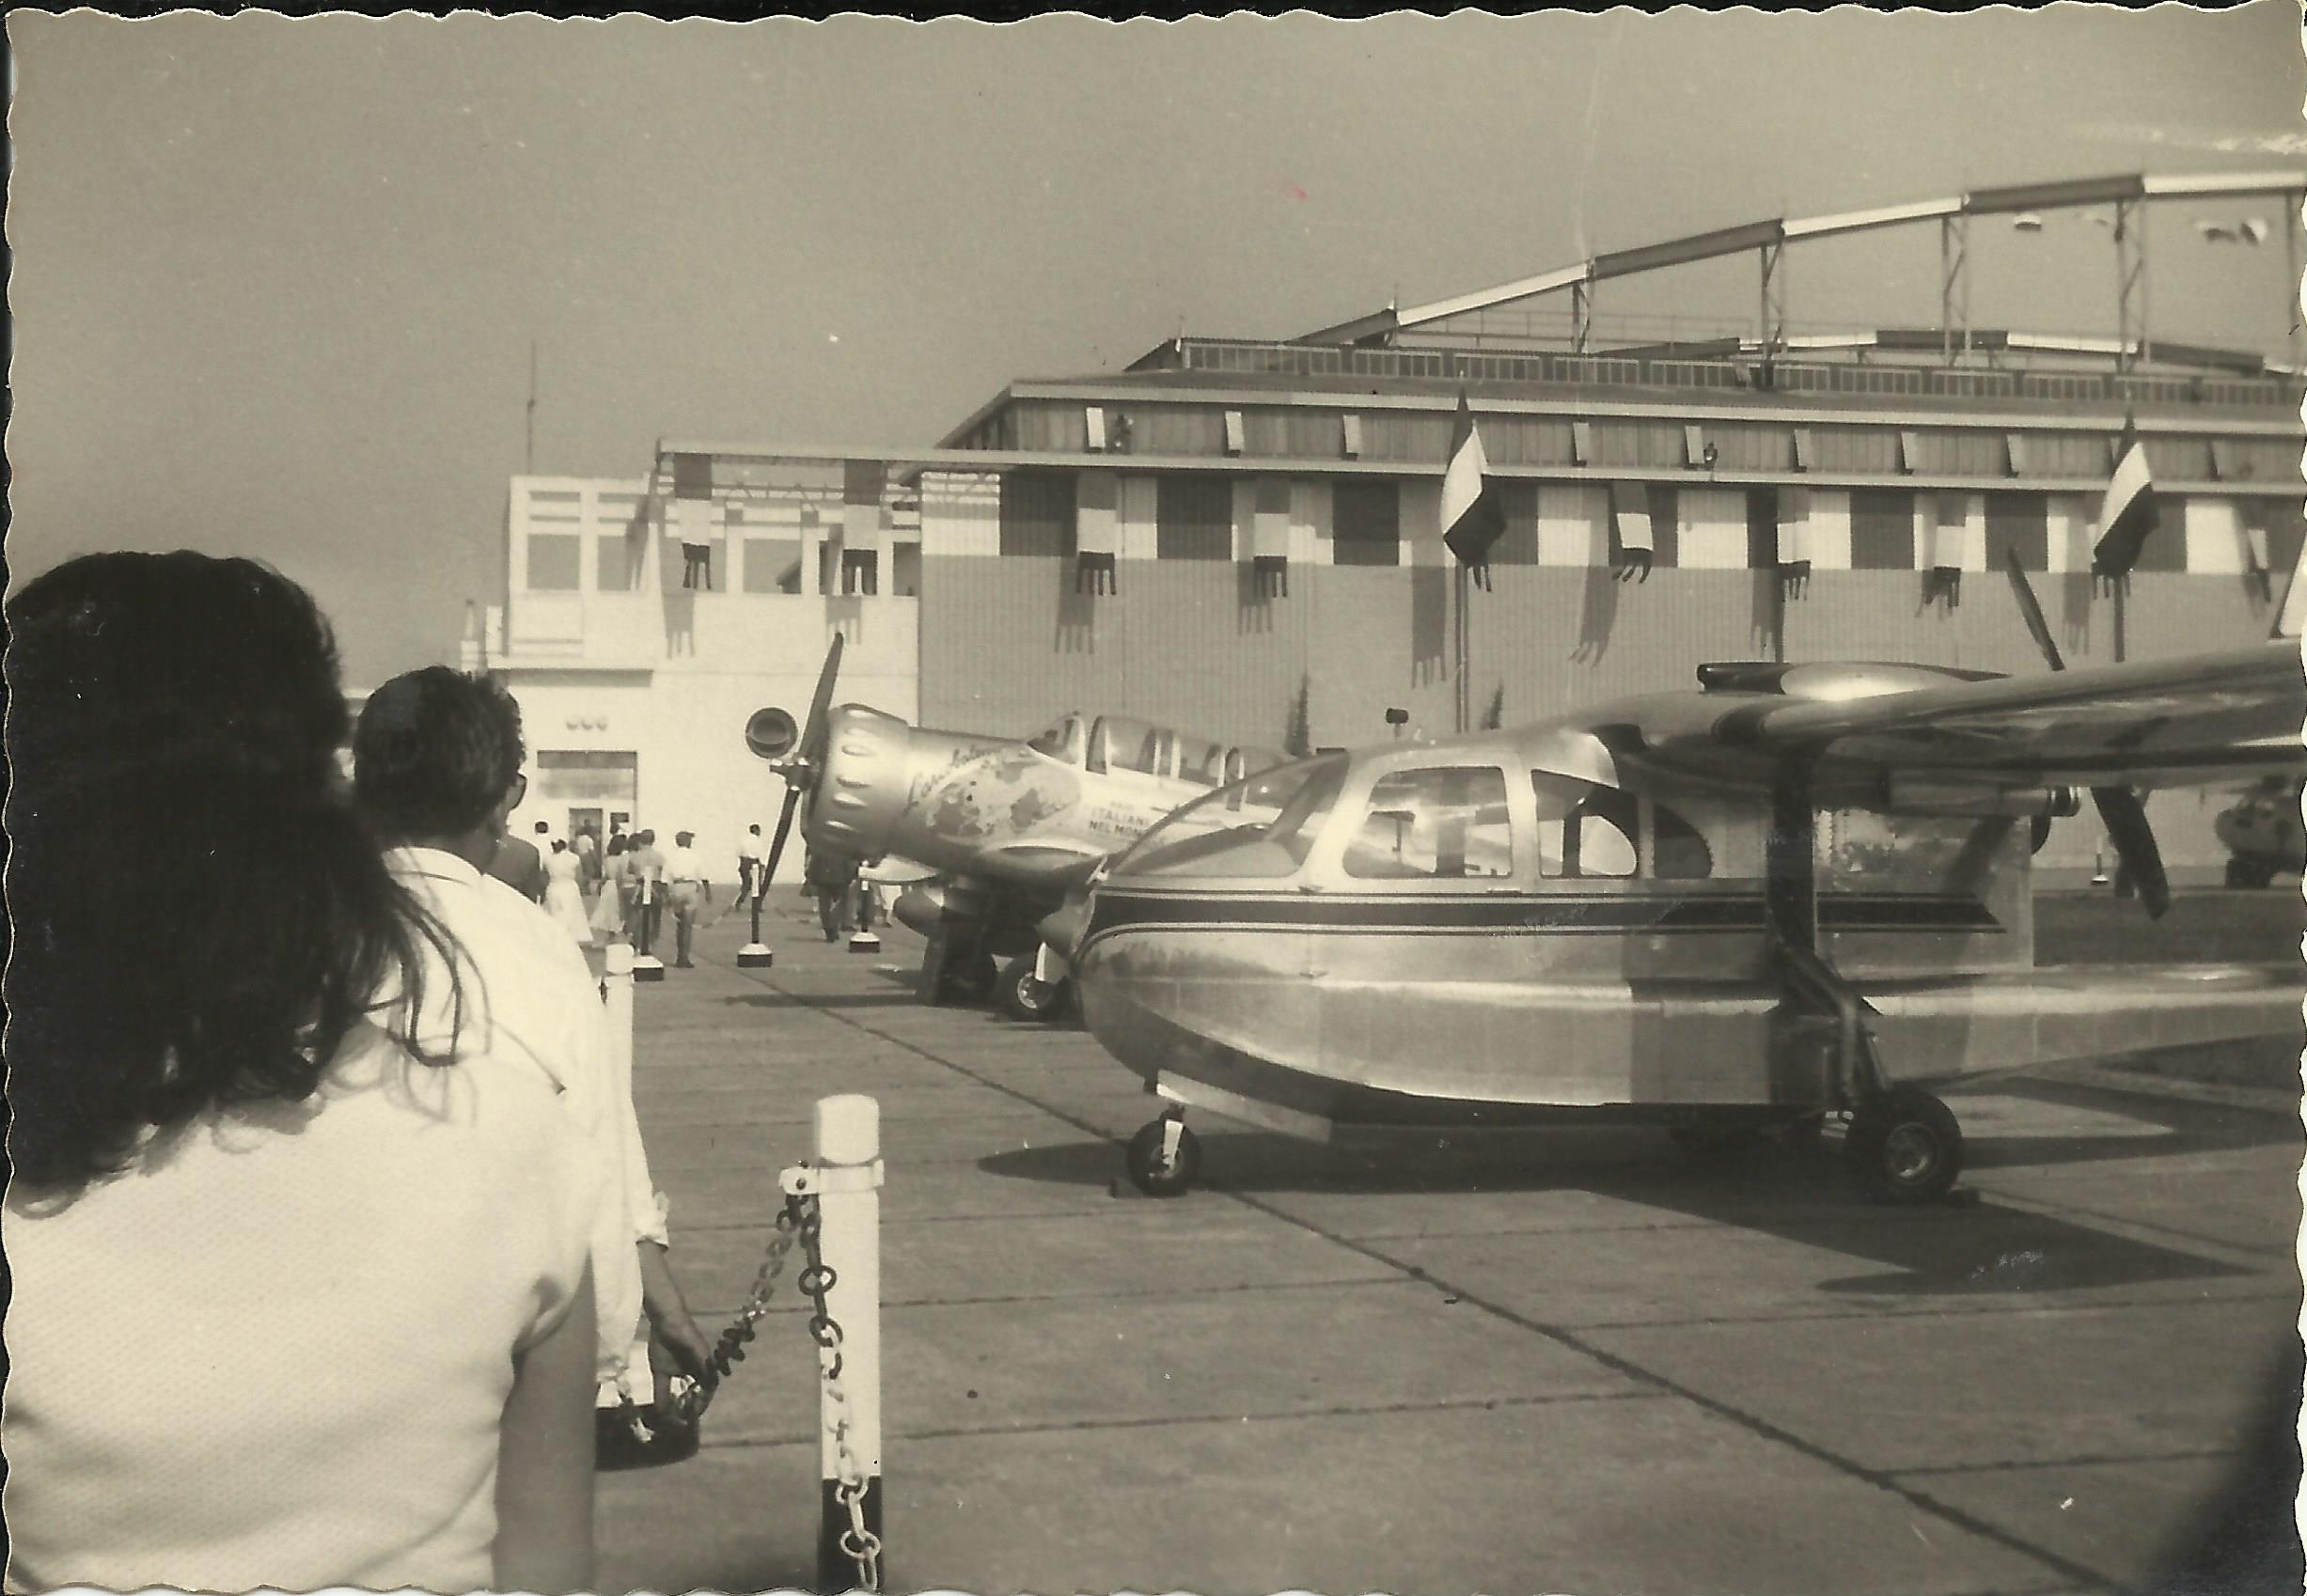 MAB Linate (Aeroporto Forlanini) 1957